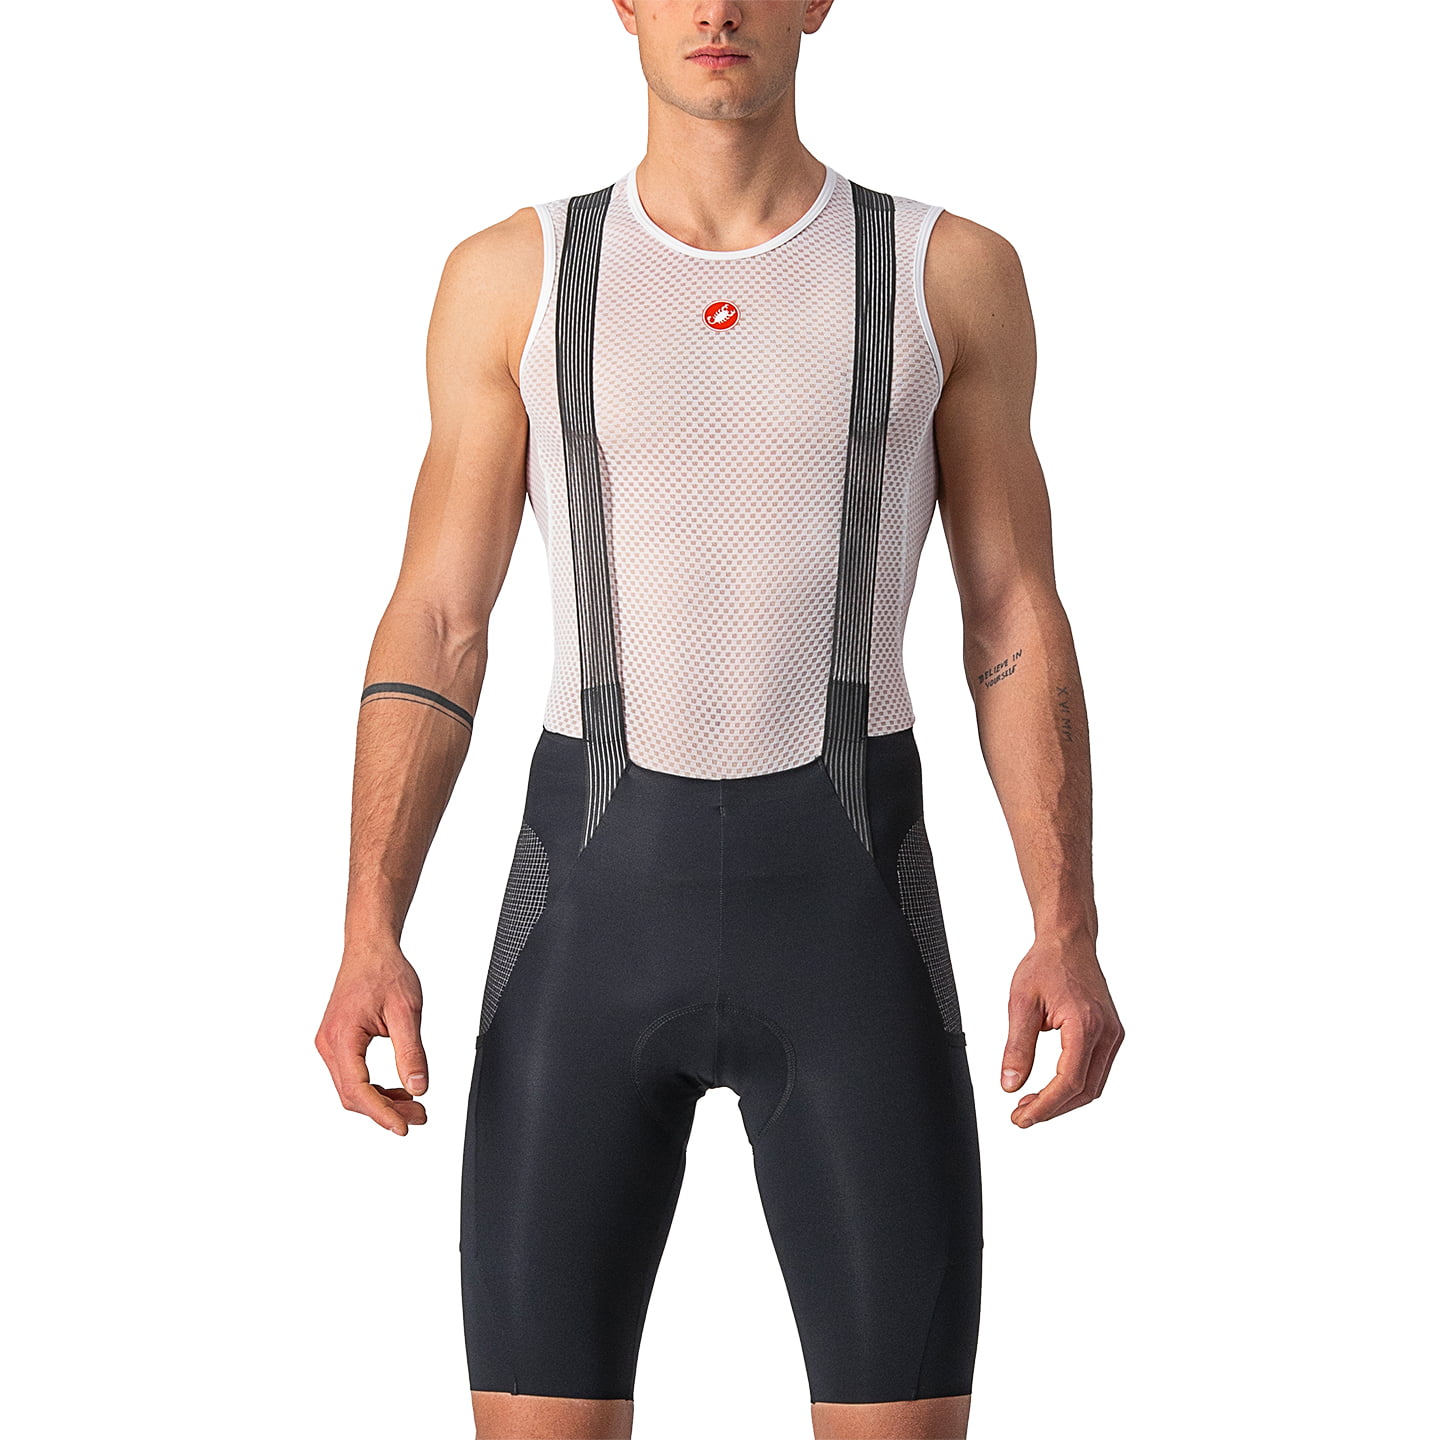 Free Unlimited Bib Shorts Bib Shorts, for men, size L, Cycle shorts, Cycling clothing